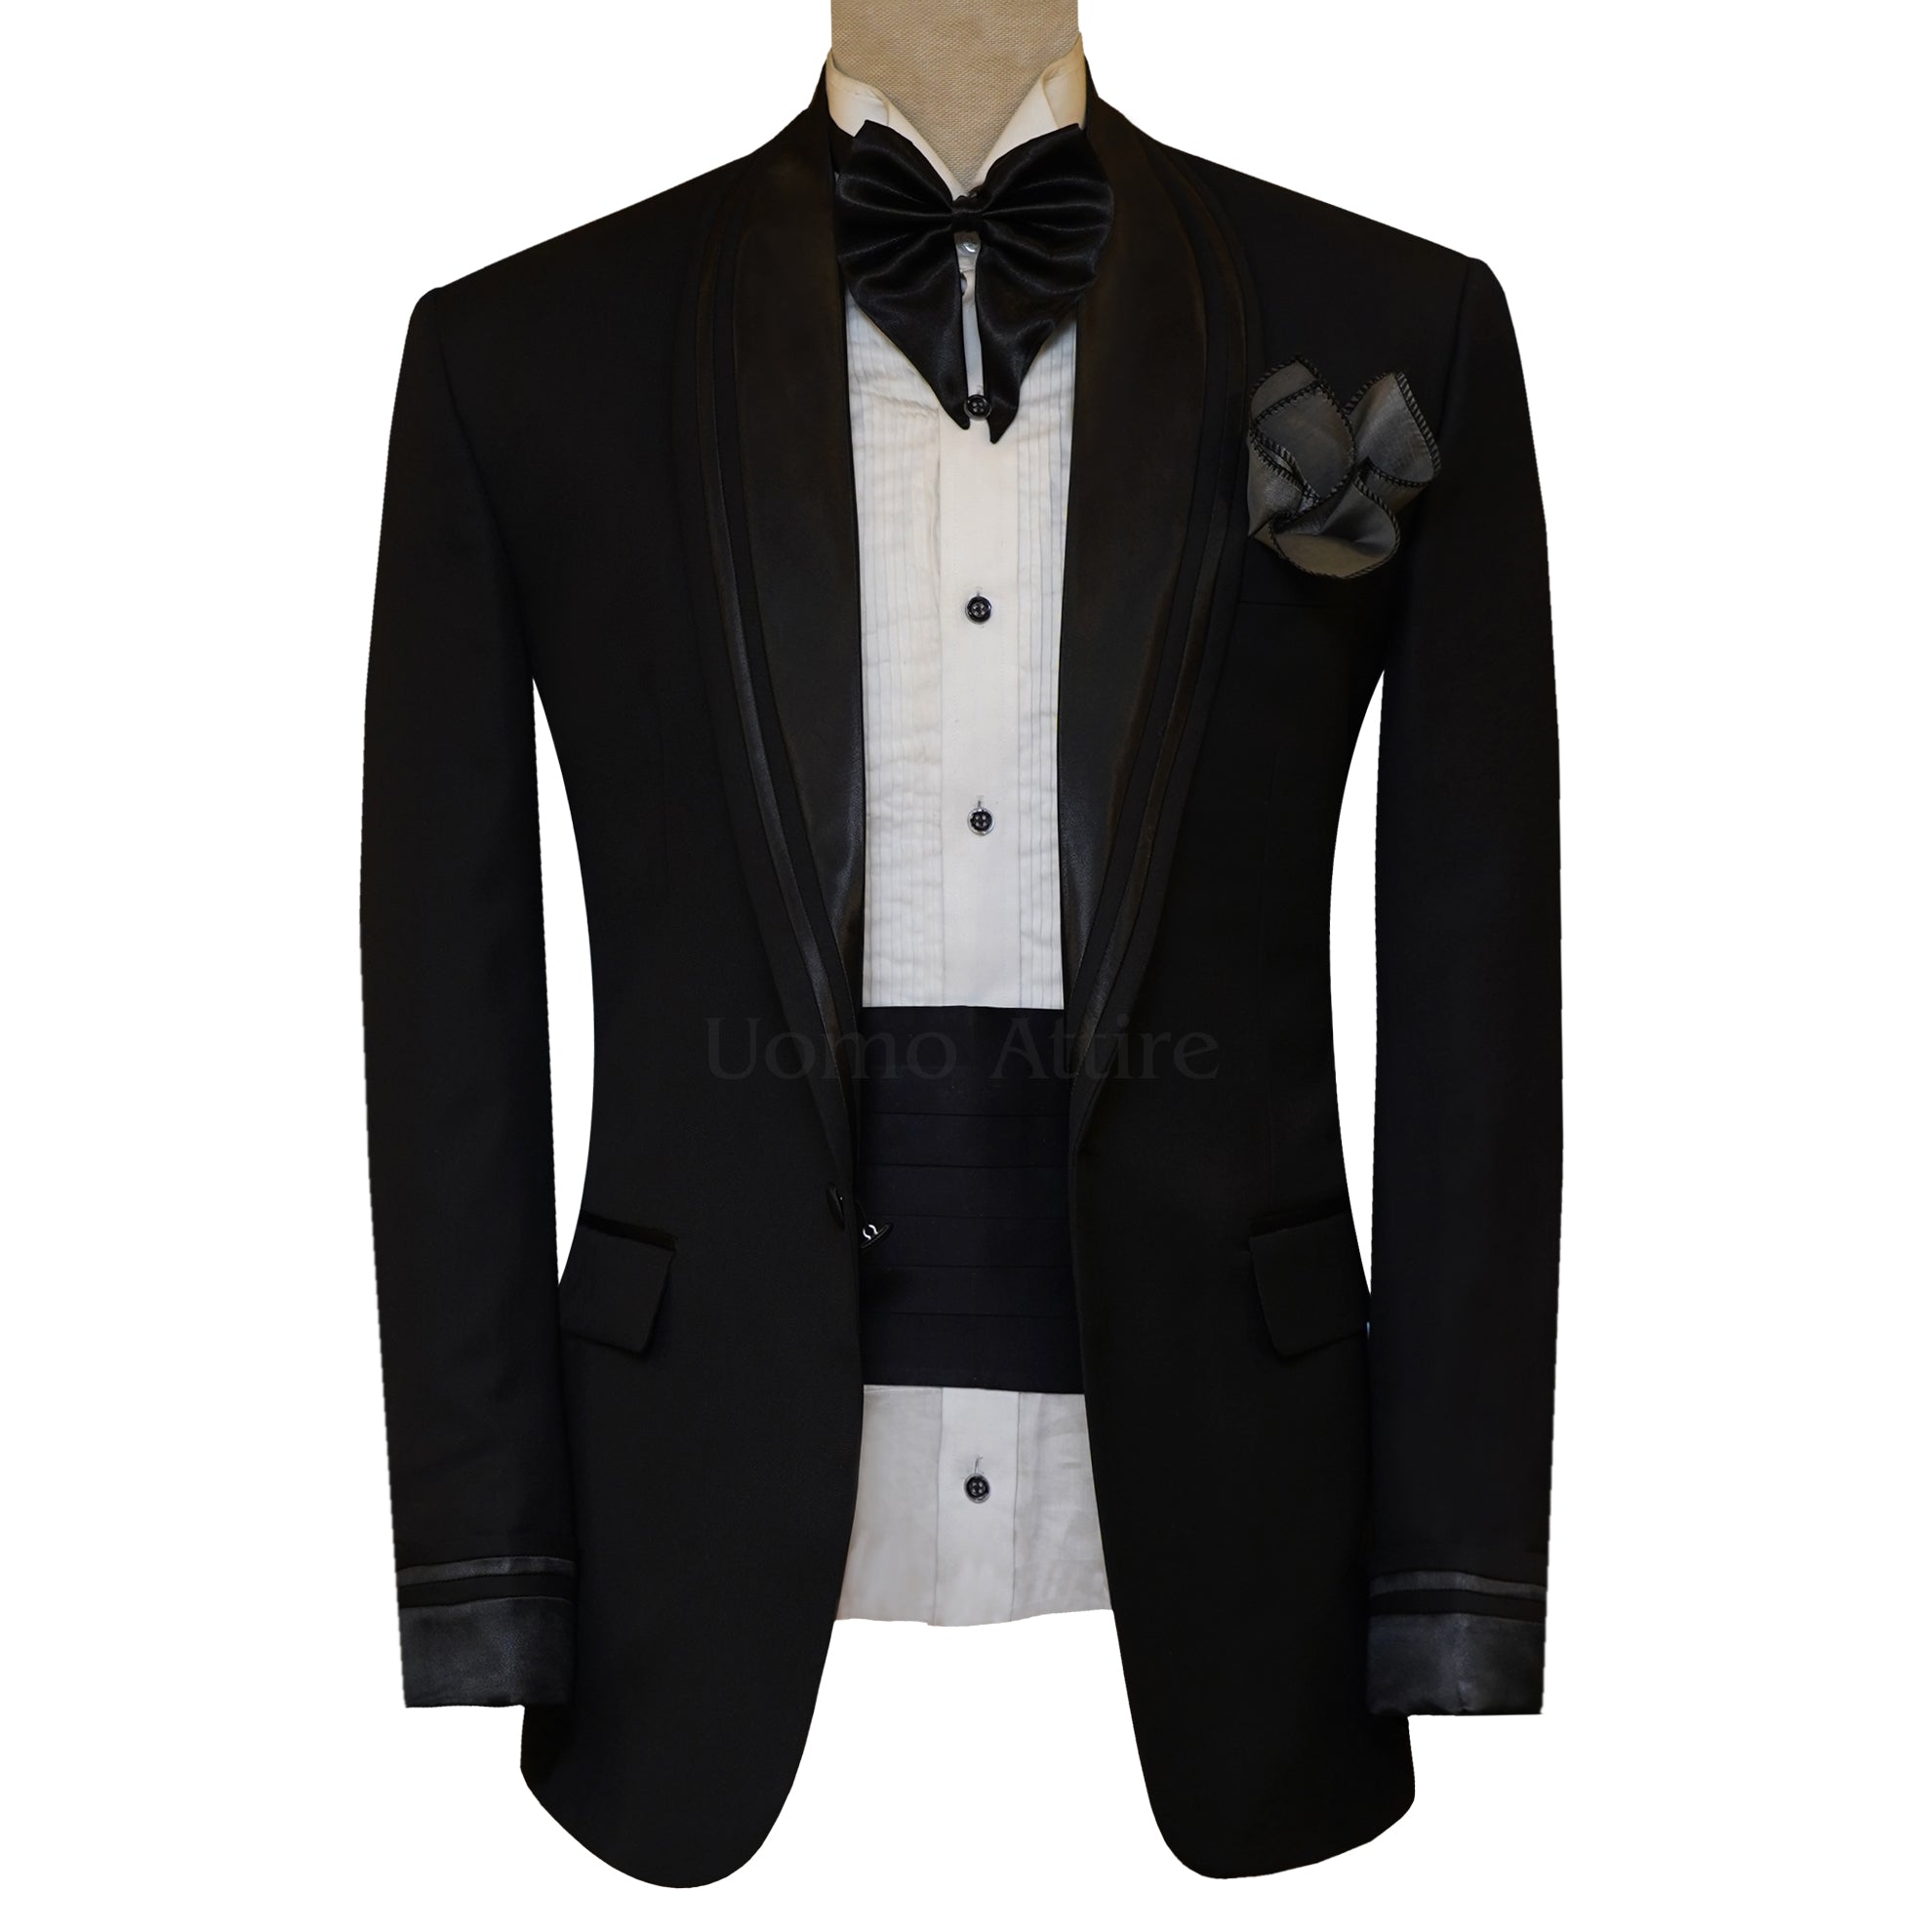 Black Tuxedo Jacket for Groom with Tuxedo Belt